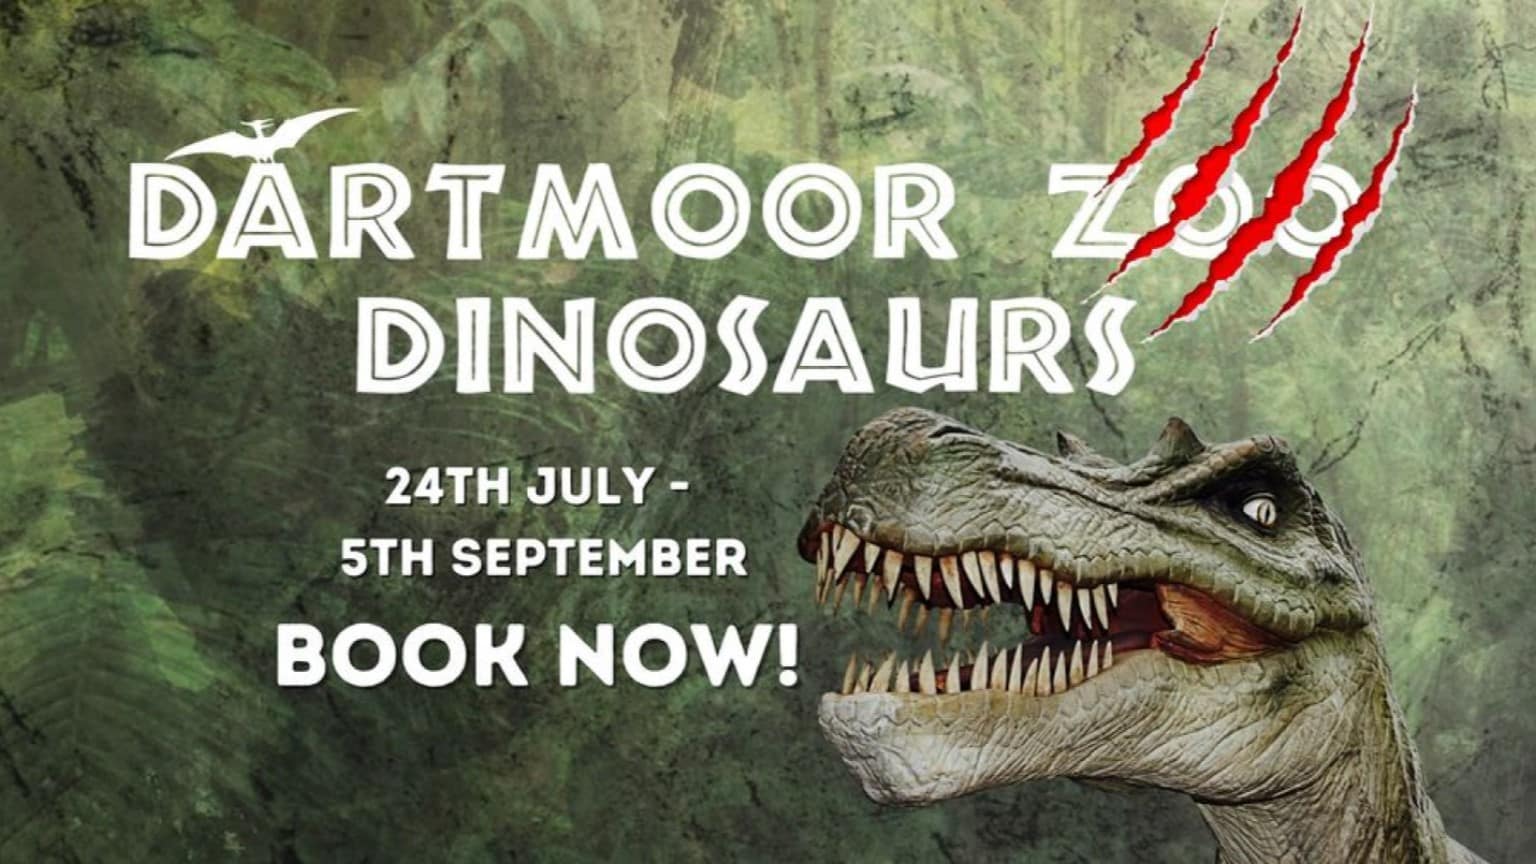 Dartmoor Zoo Dinosaurs